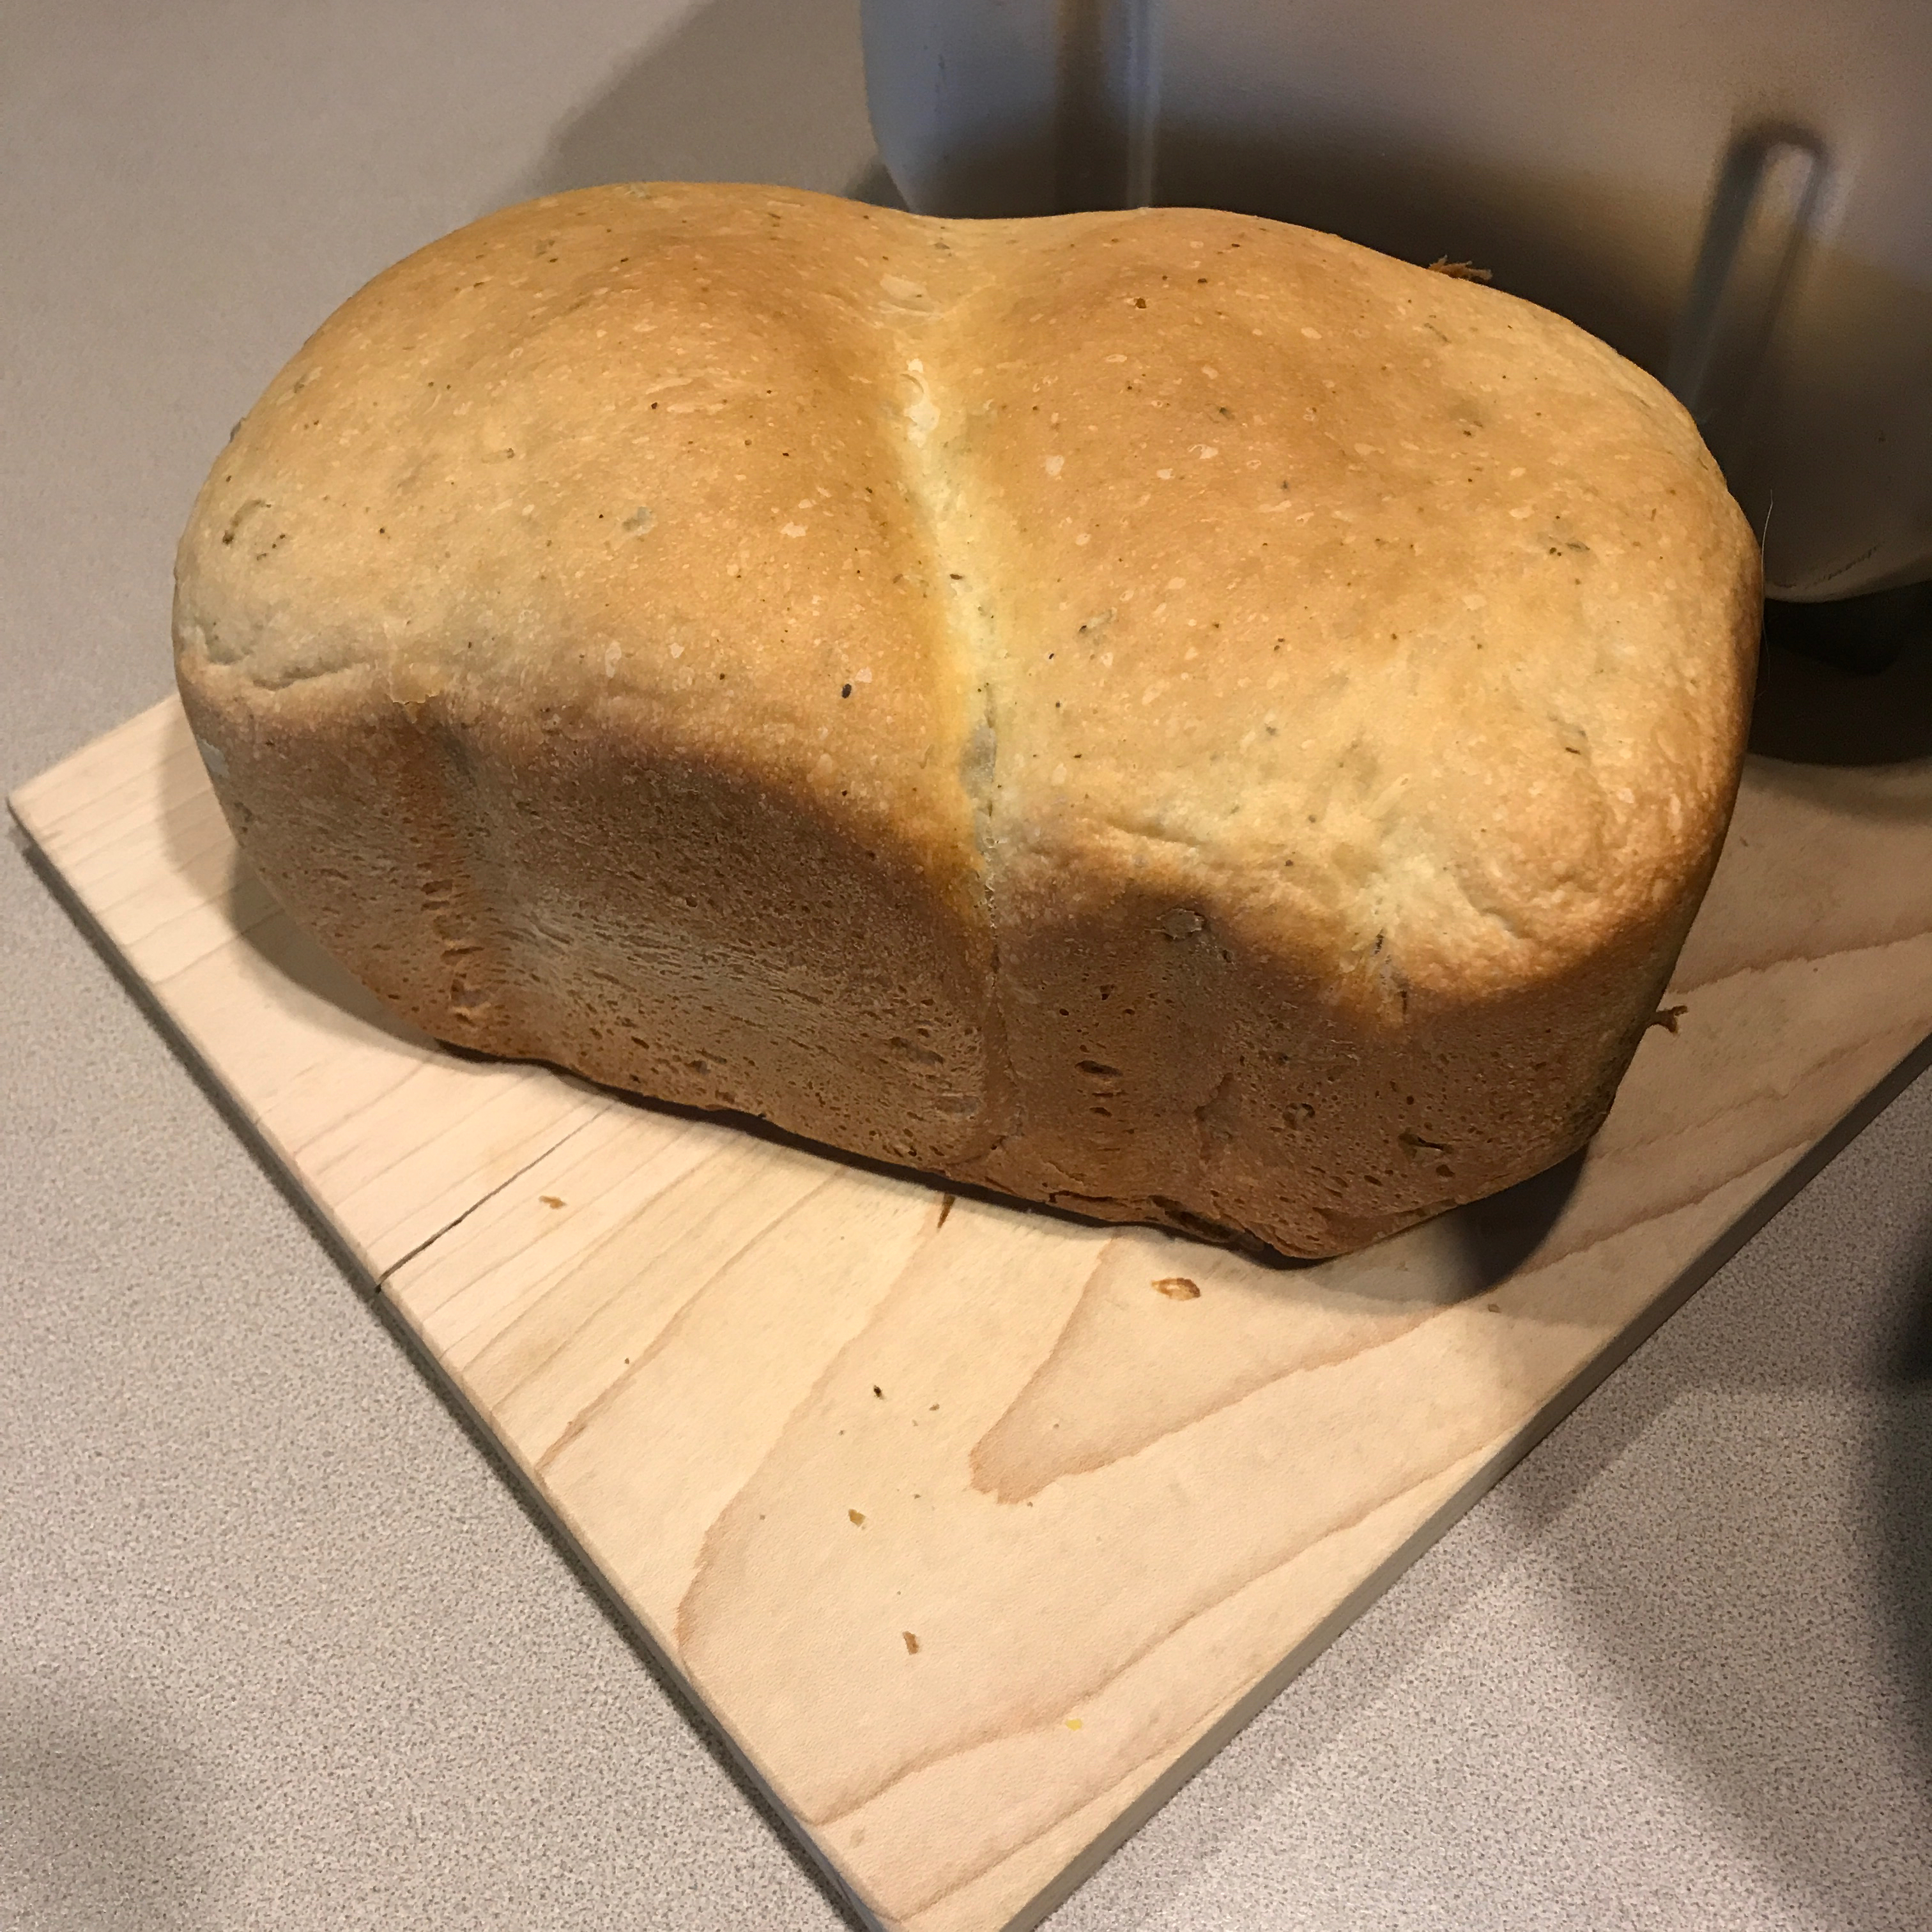 Jo's Rosemary Bread 